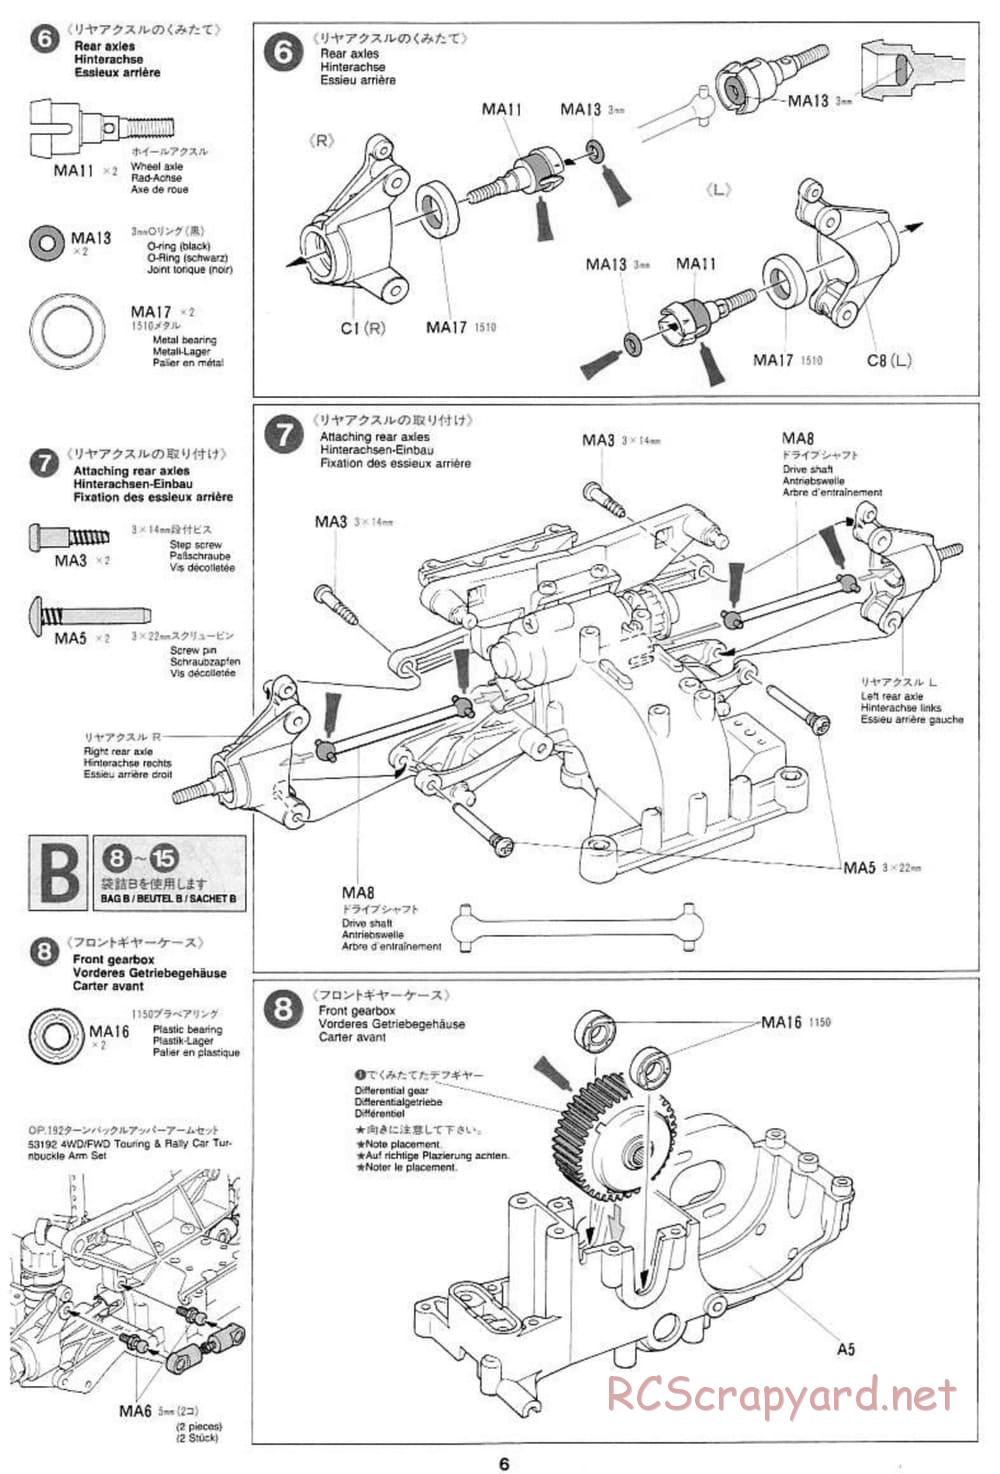 Tamiya - Toyota Corolla WRC - TA-03FS Chassis - Manual - Page 6